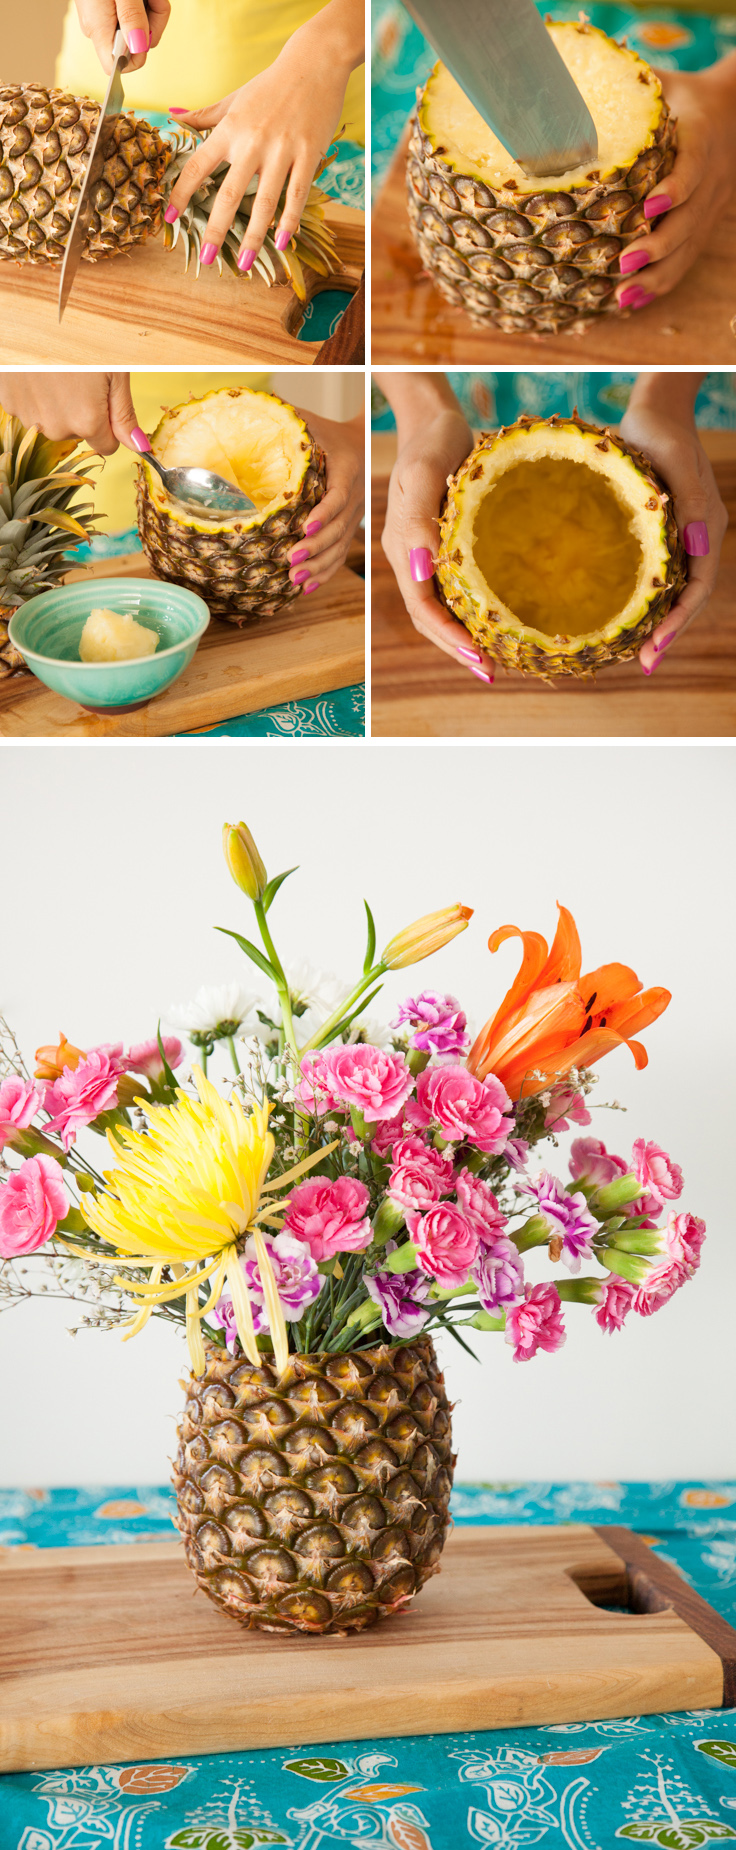 DIY Pineapple Vase - amazing floral centrepiece for summer!